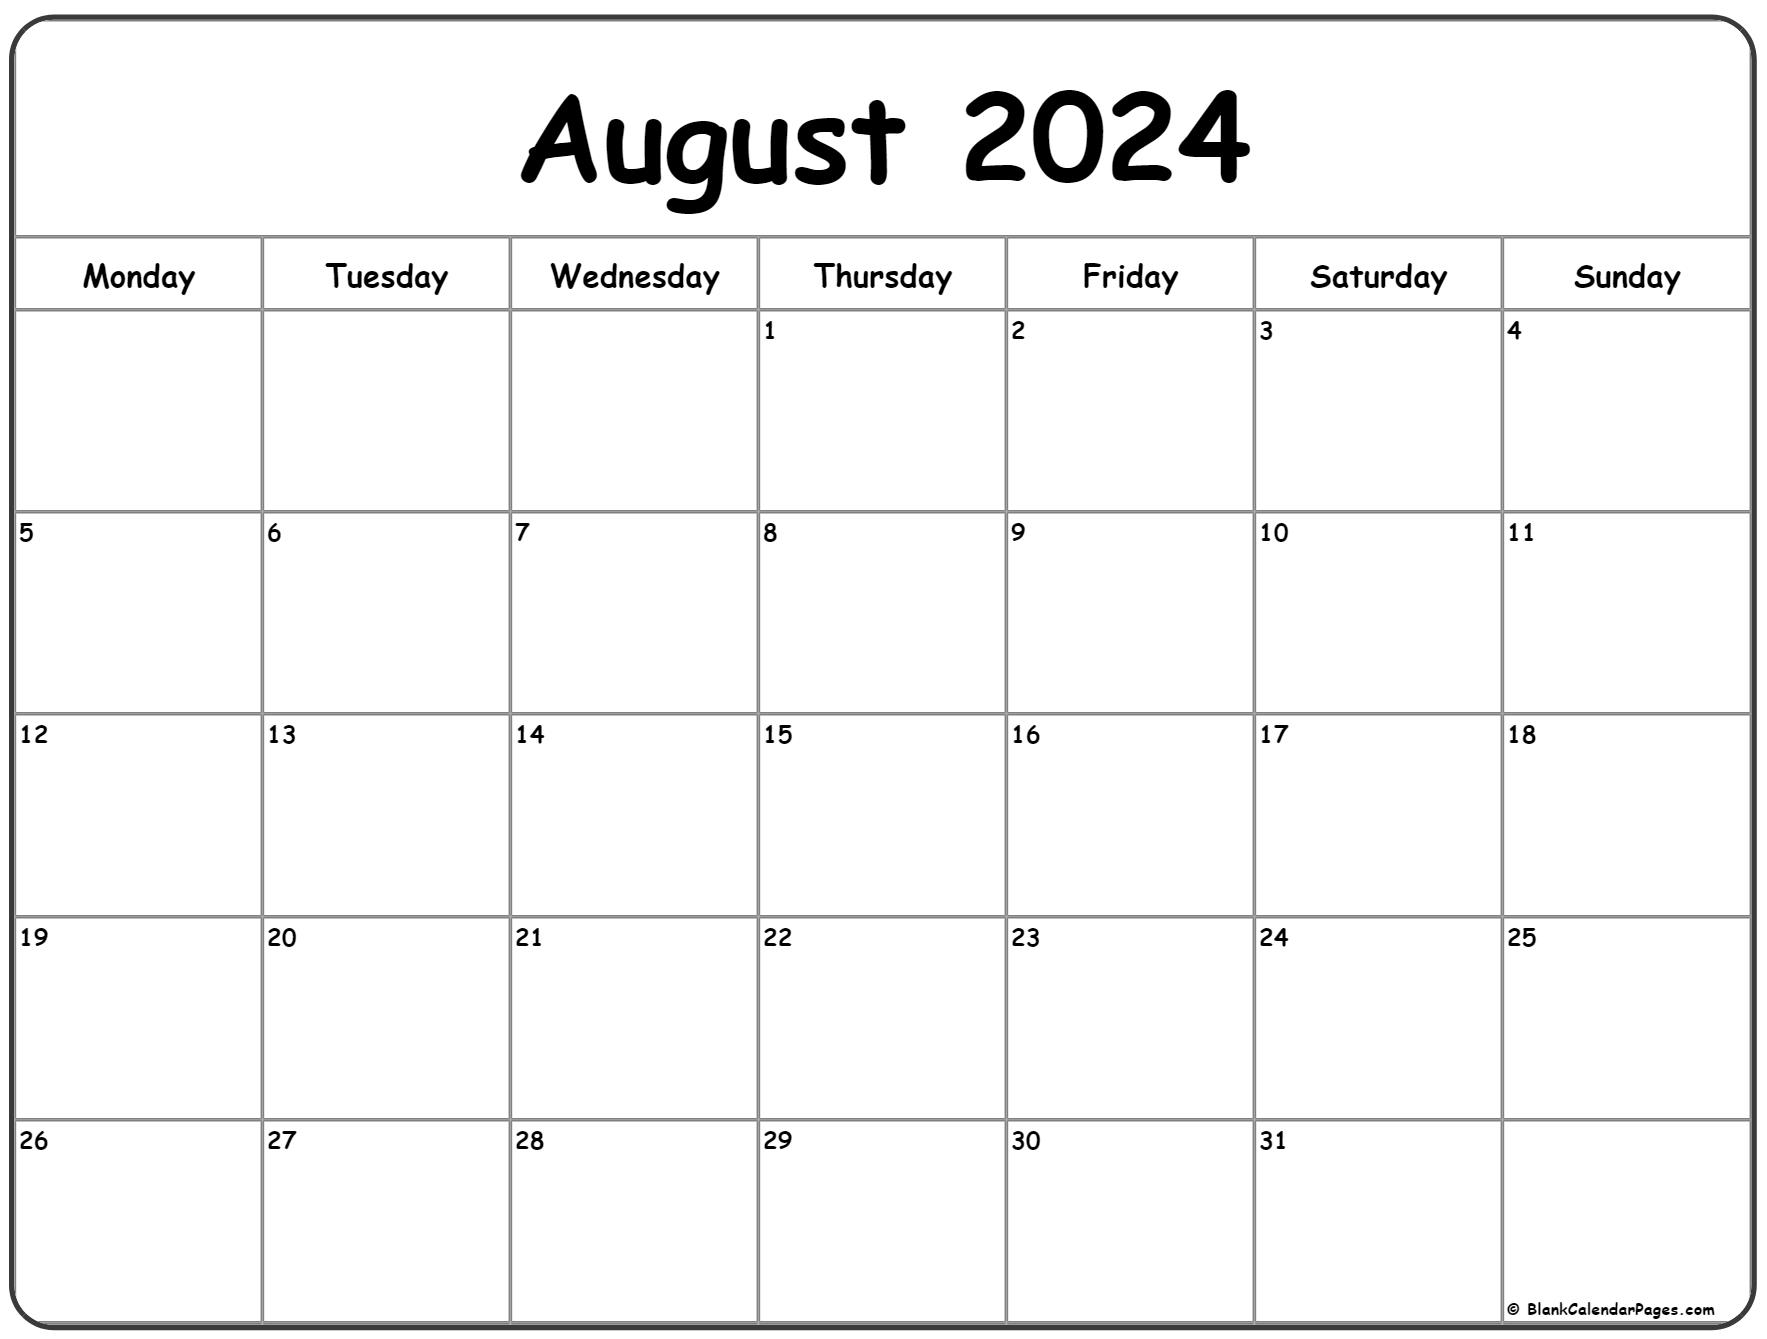 Aug Calendar 2021 August 2021 Monday Calendar | Monday to Sunday